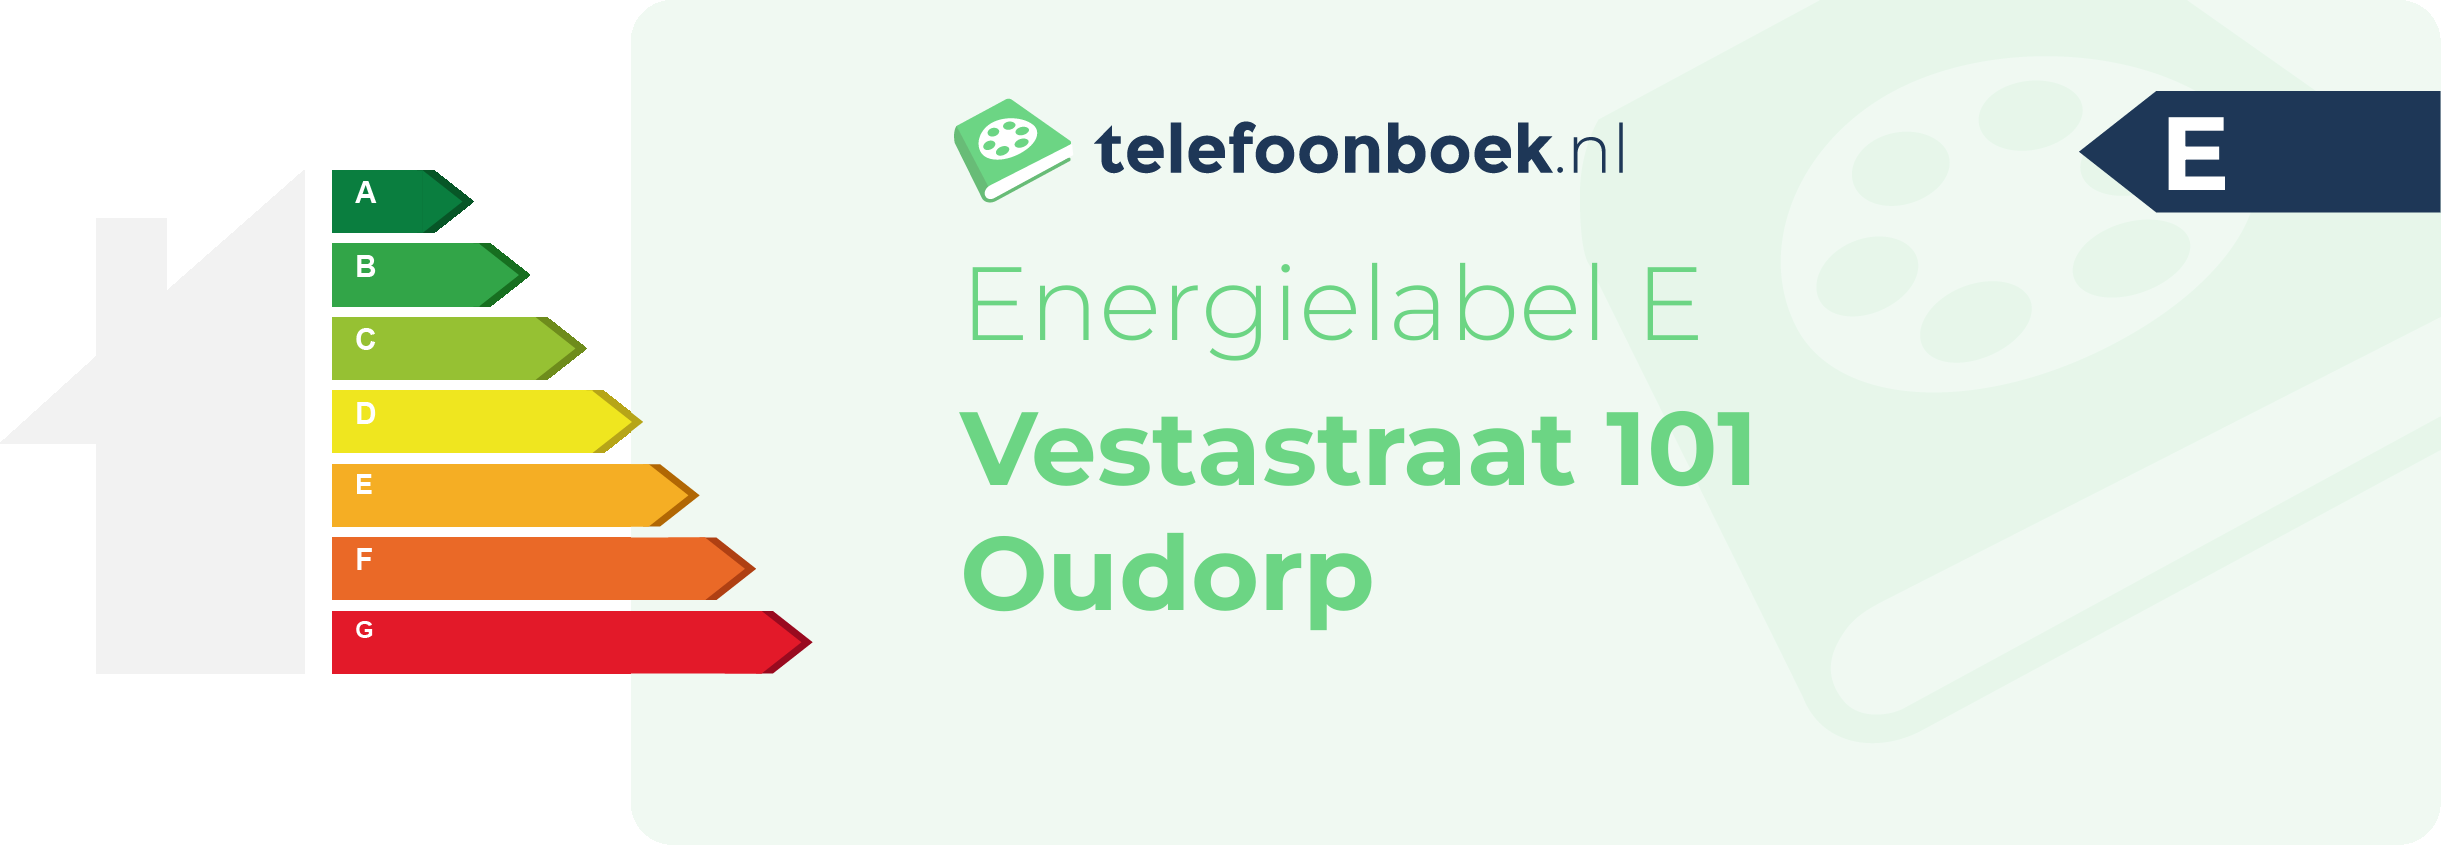 Energielabel Vestastraat 101 Oudorp